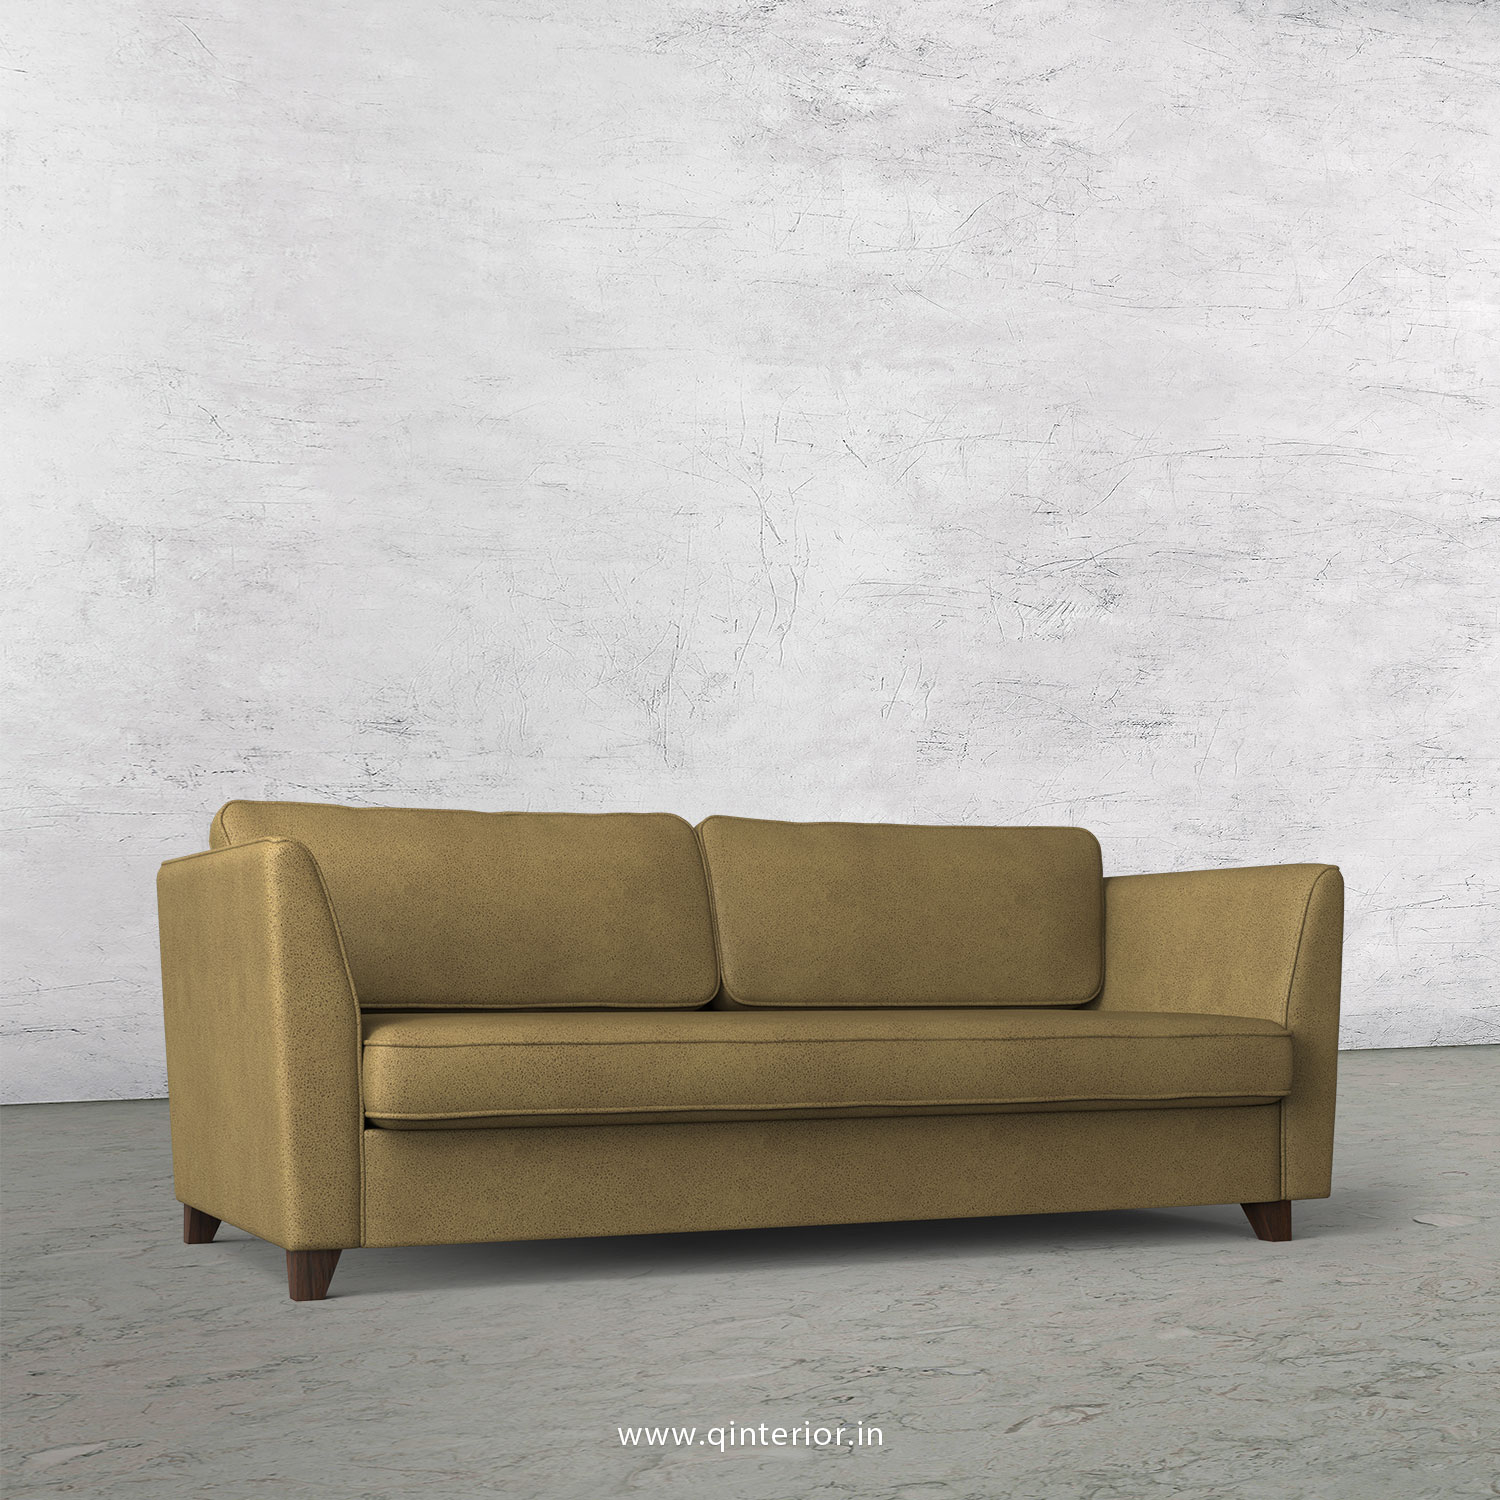 KINGSTONE 3 Seater Sofa in Fab Leather Fabric - SFA004 FL01